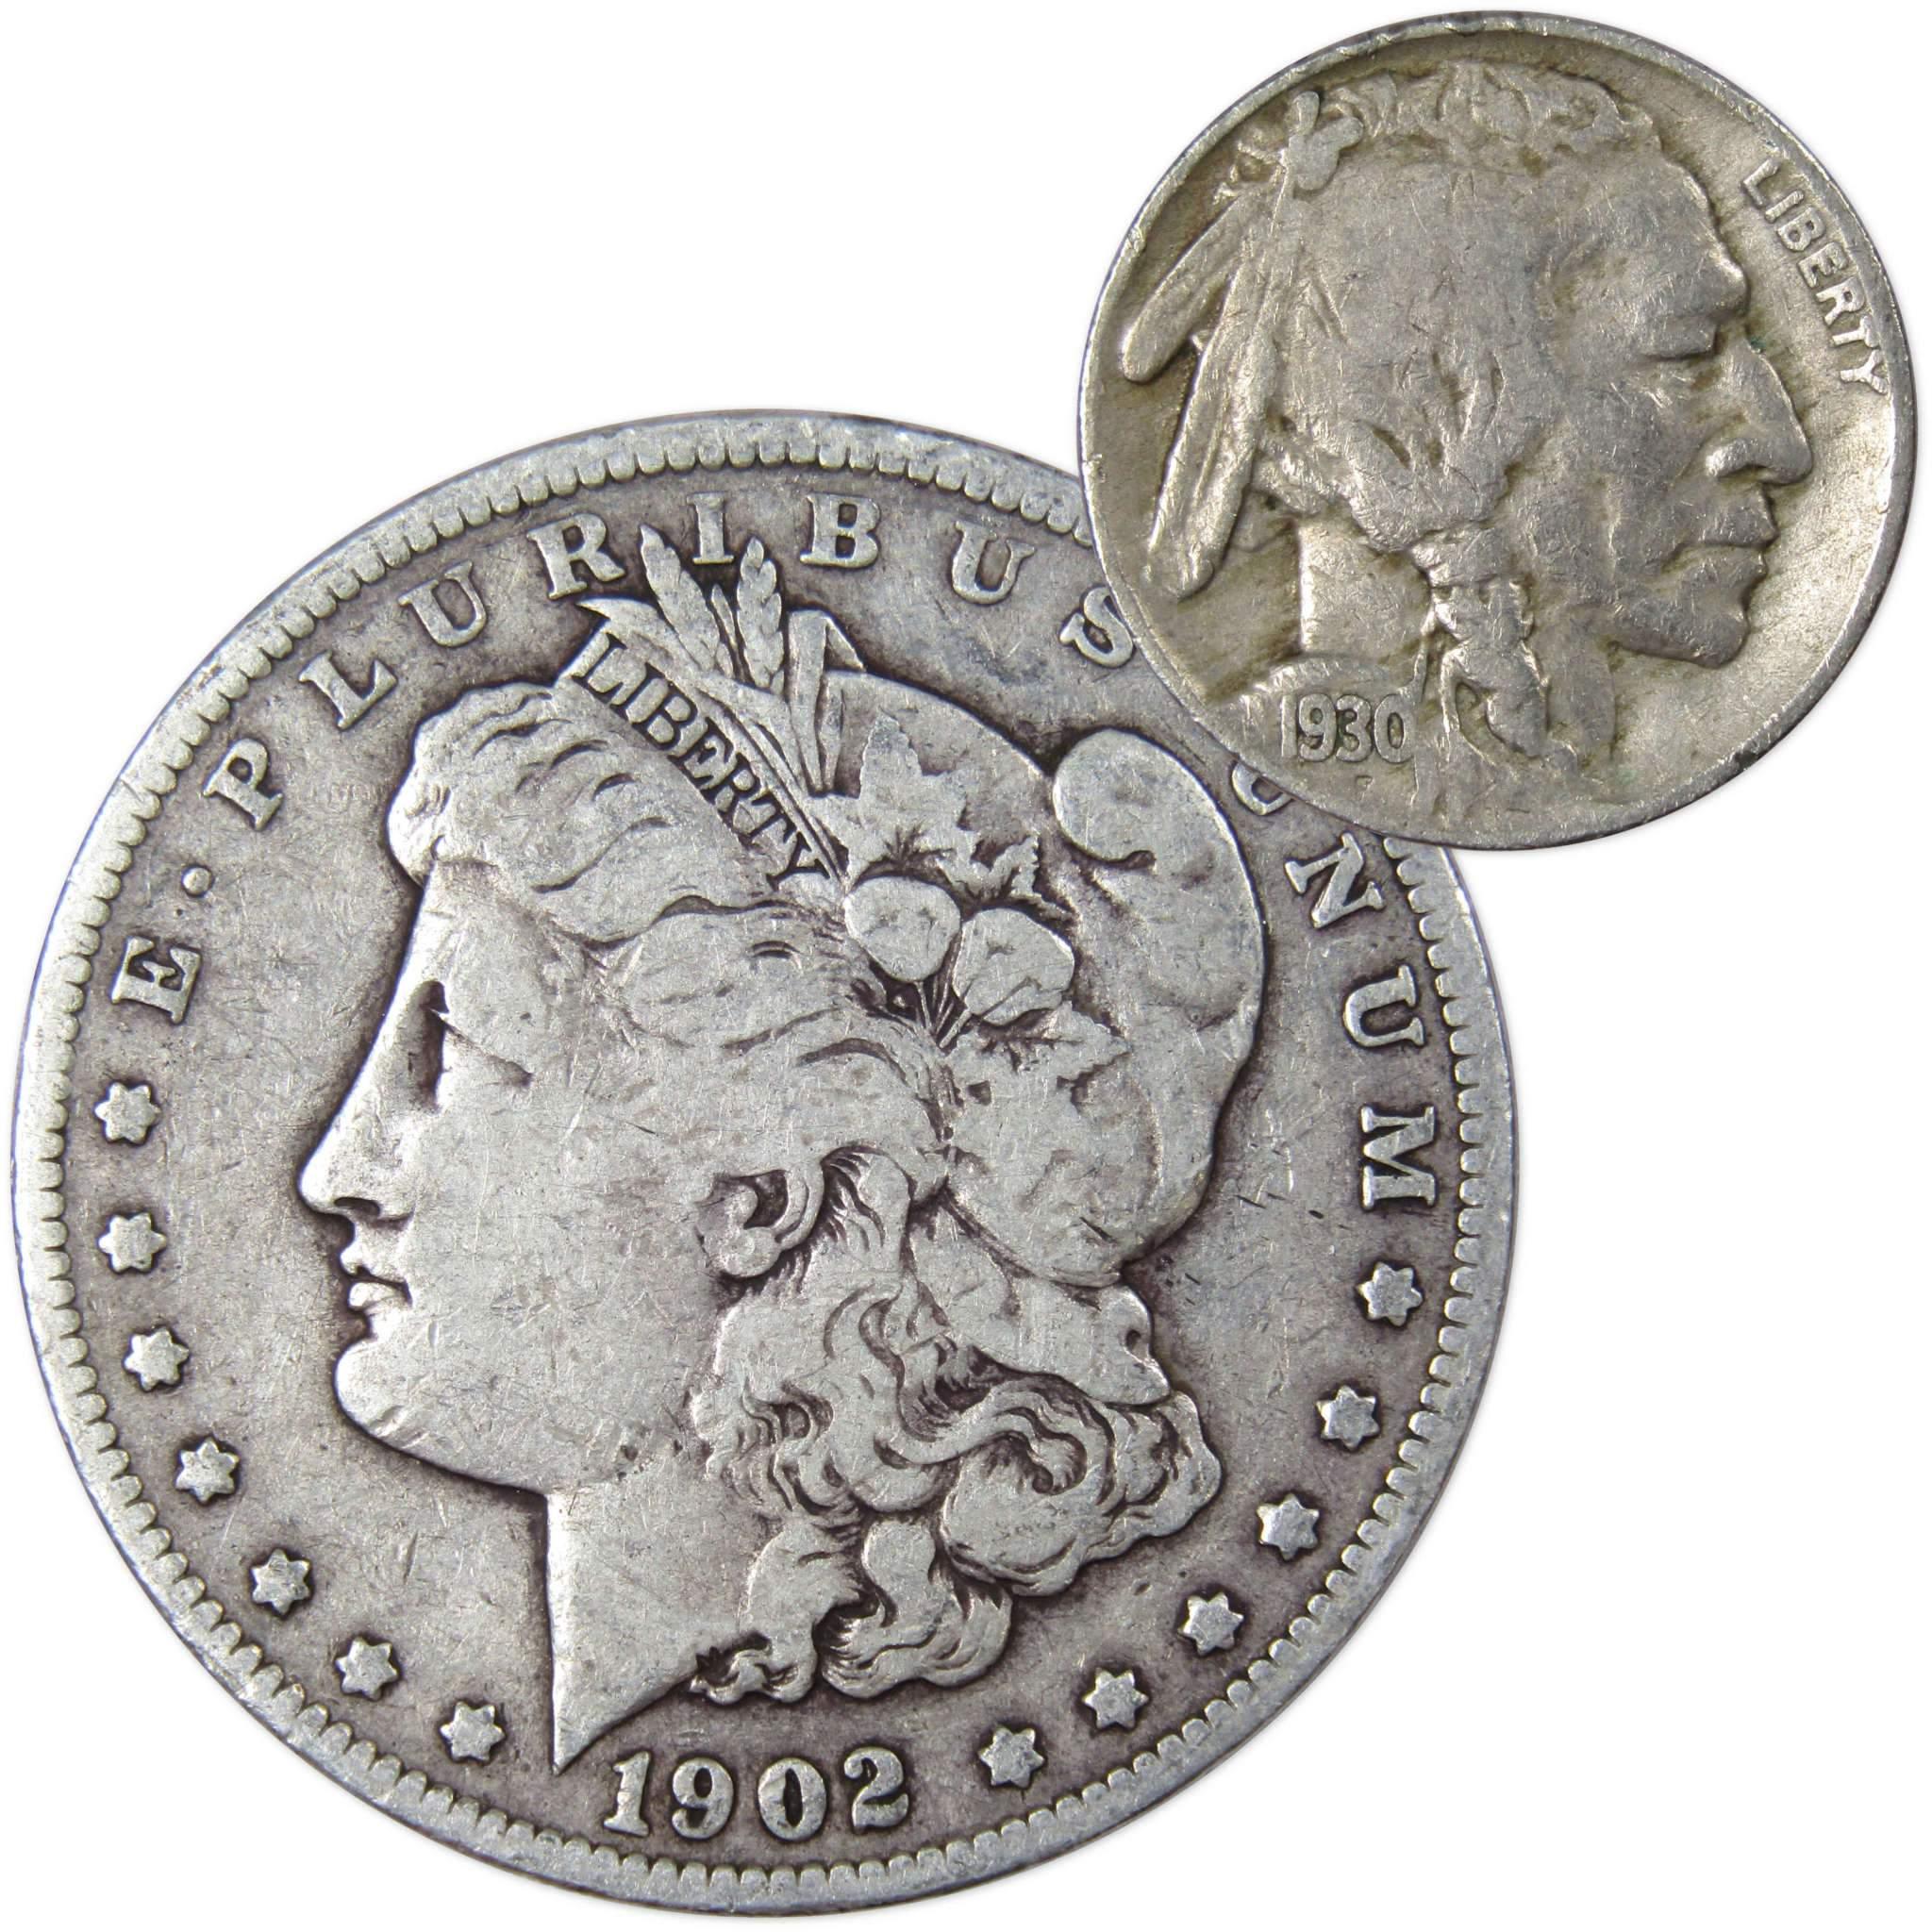 1902 Morgan Dollar VG Very Good 90% Silver with 1930 S Buffalo Nickel F Fine - Morgan coin - Morgan silver dollar - Morgan silver dollar for sale - Profile Coins &amp; Collectibles